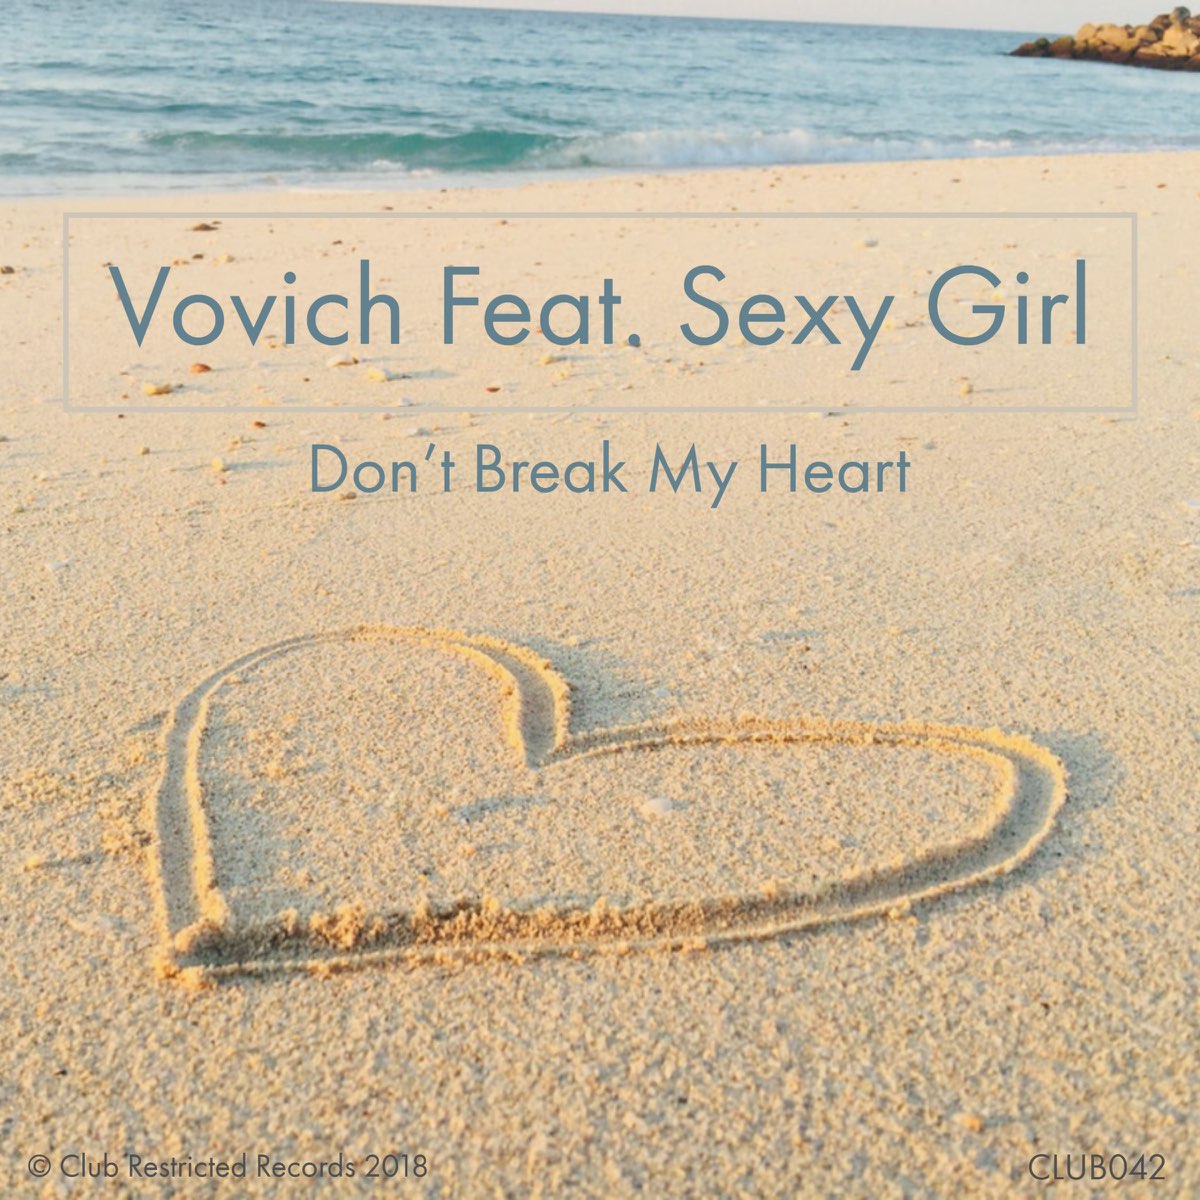 Don't Break Heart. Break my Heart. Don't Break my Heart (Original Mix). Solitario don t Break my Heart 2019. Dont break